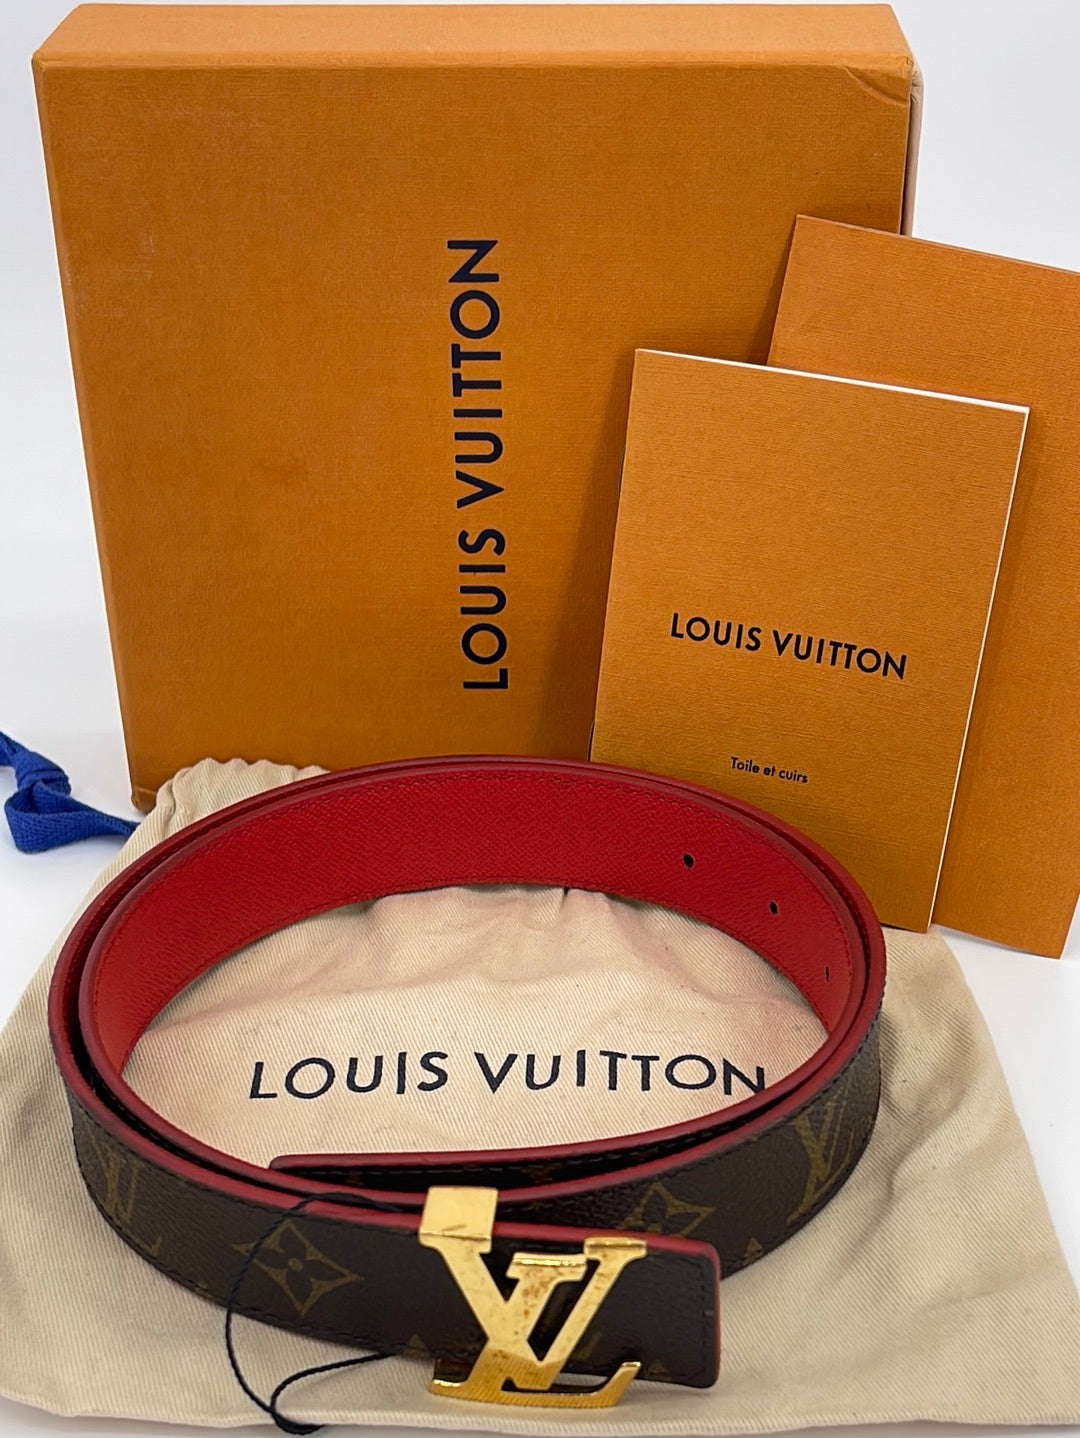 PRELOVED Louis Vuitton LV Initials Monogram Leather Medium Belt